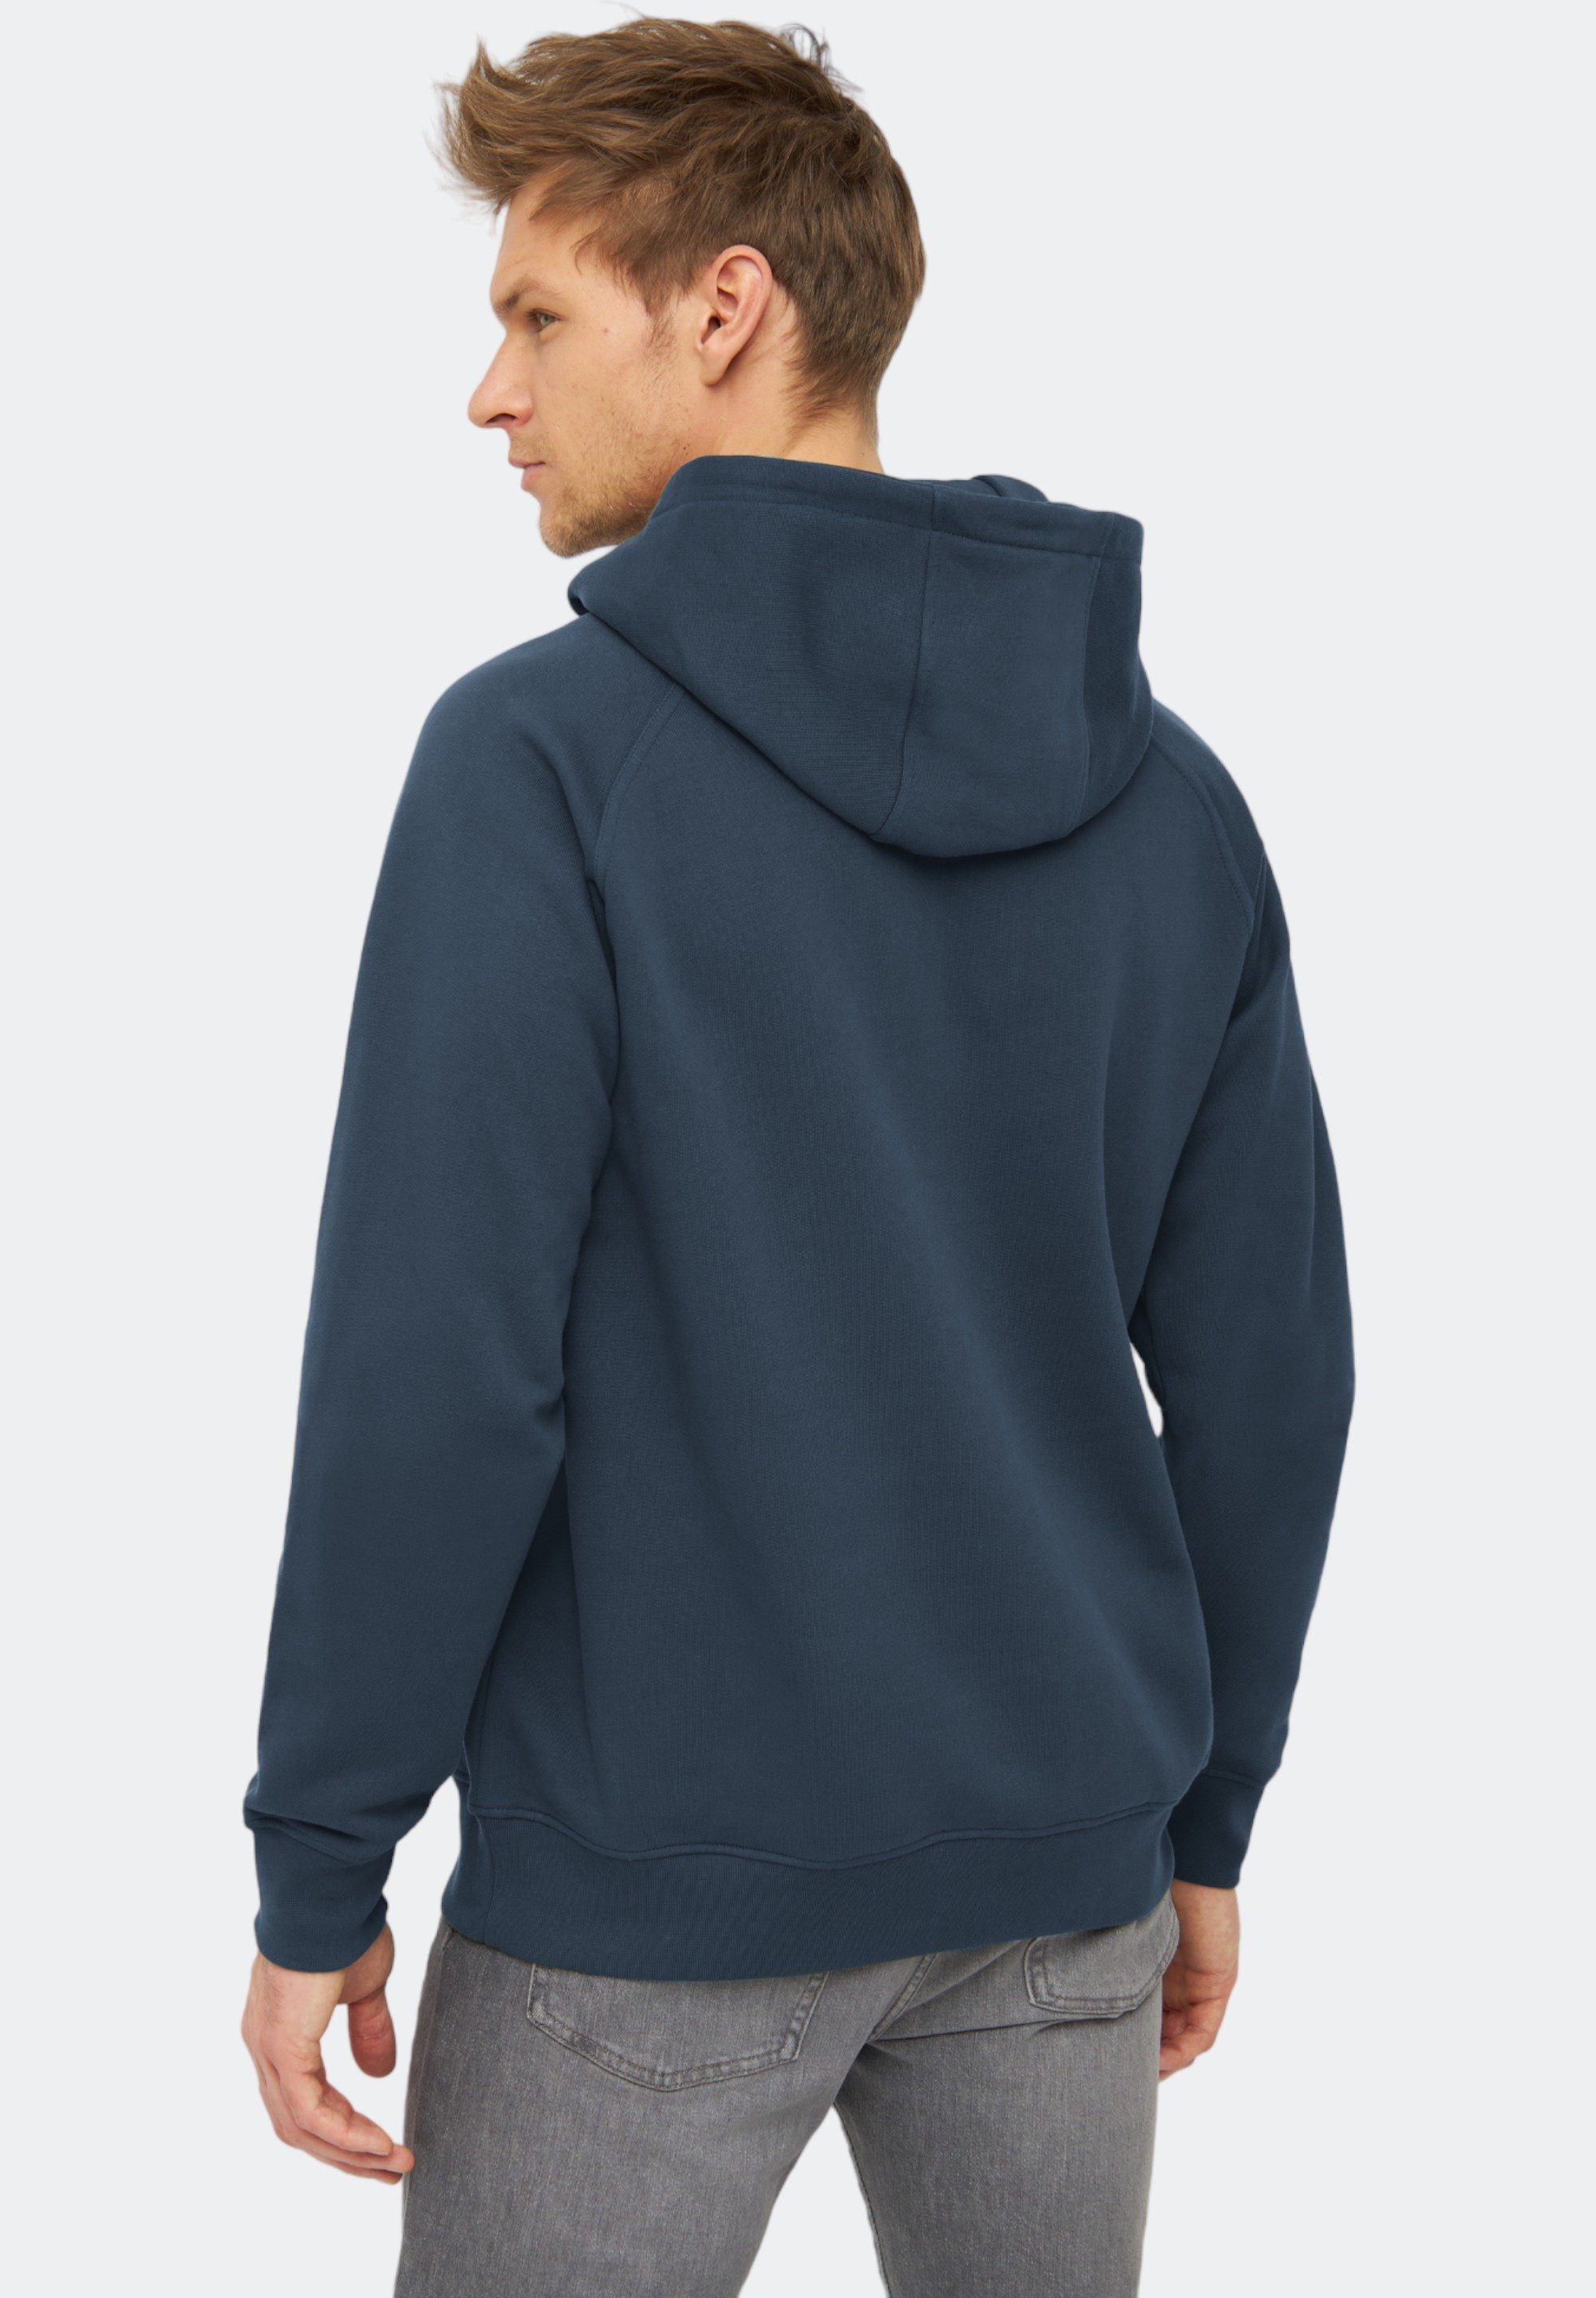 Derbe Sweatshirt Moin Made in orion Portual blue